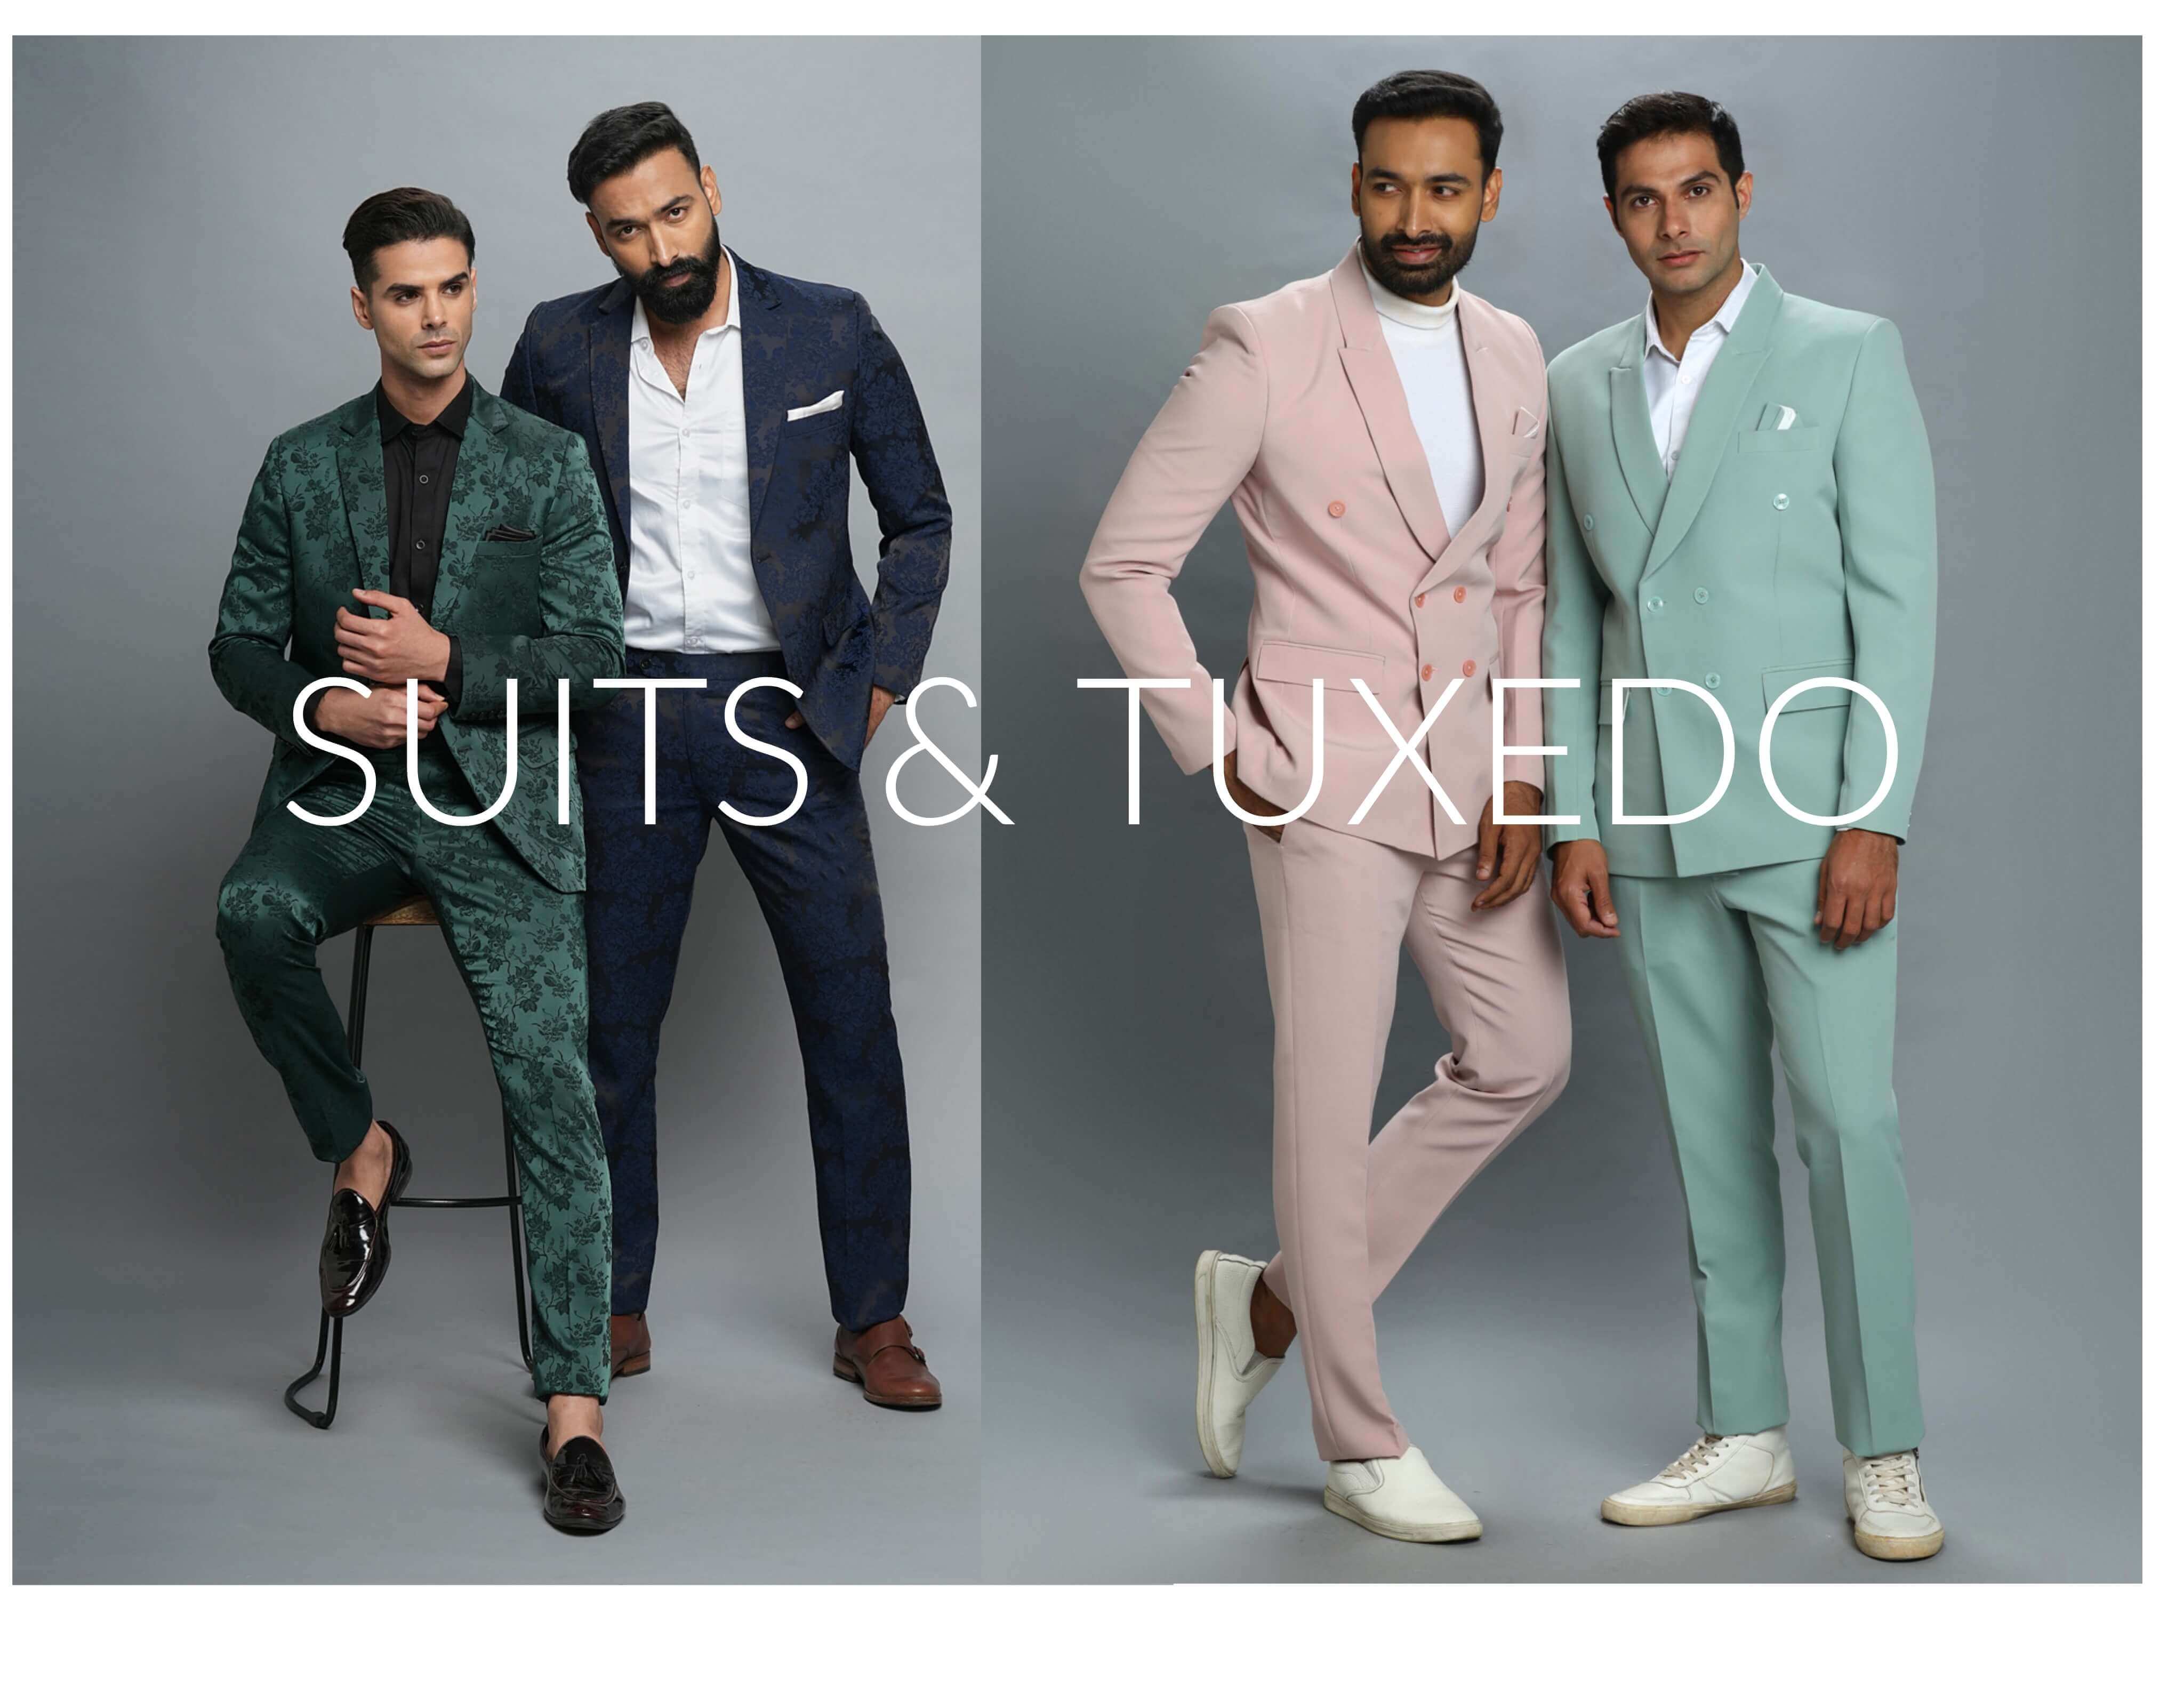 buy suits for wedding online